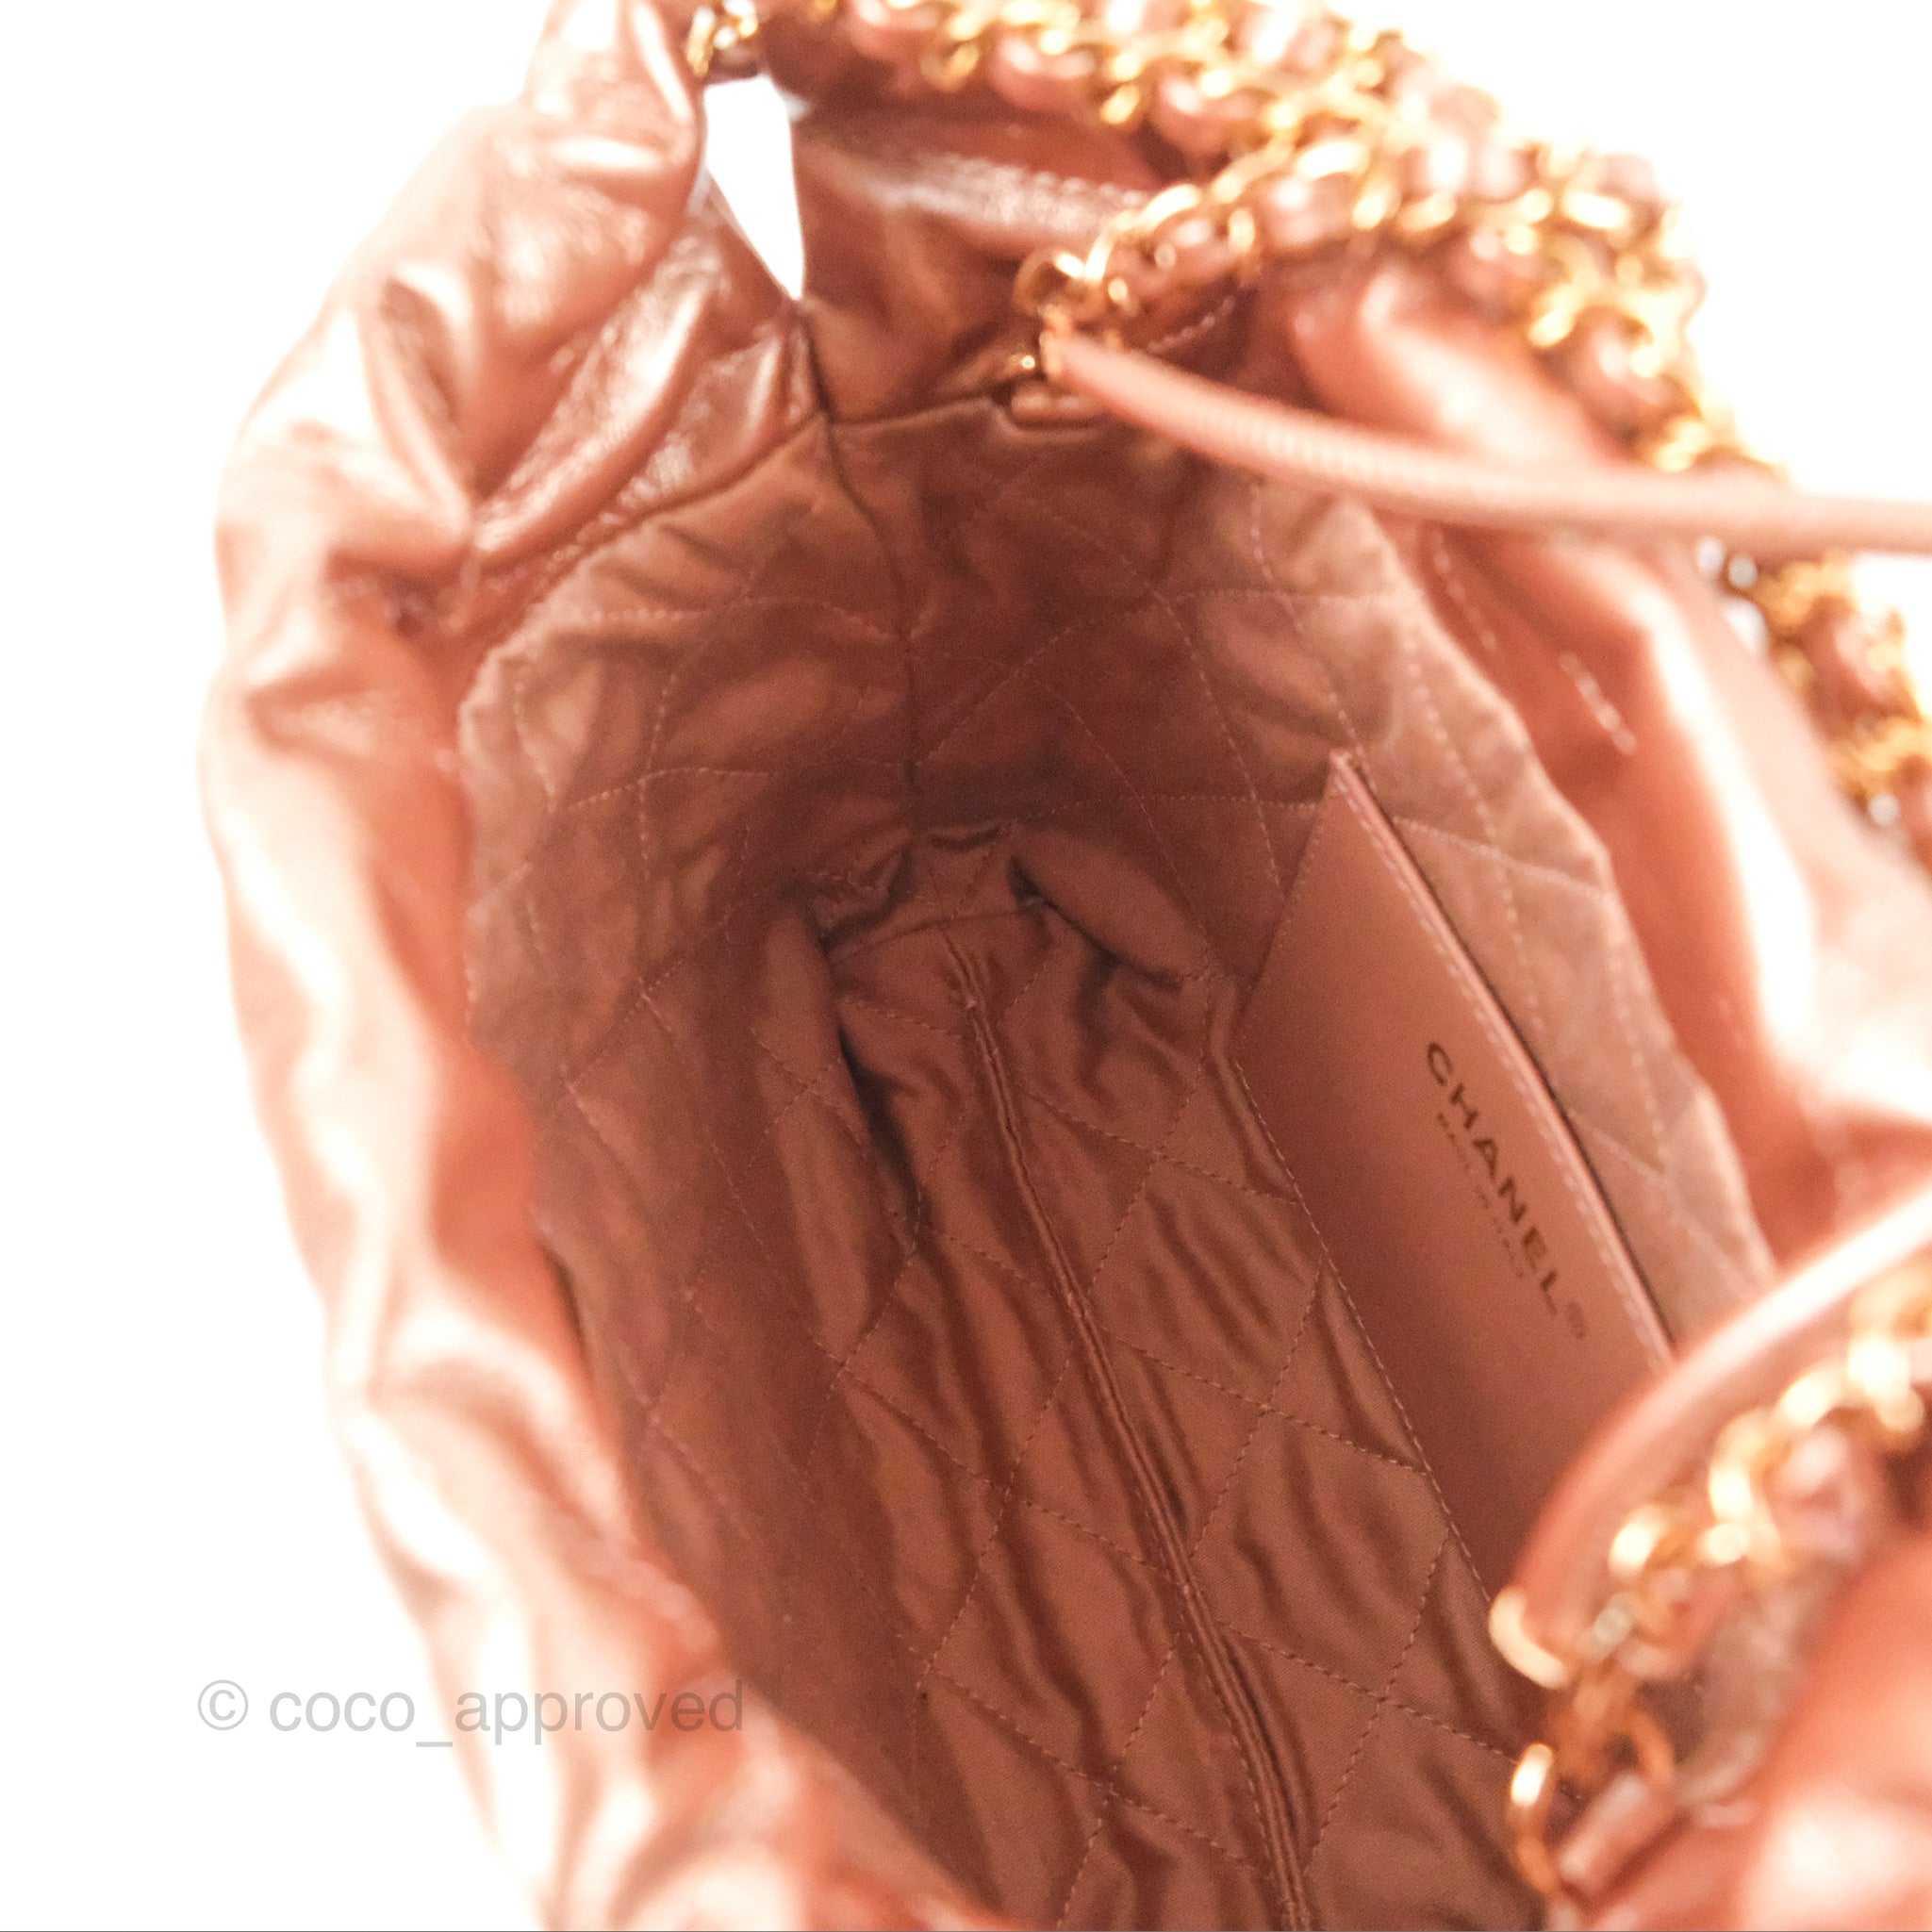 Chanel Mini 22 Bag Rose Gold Iridescent Calfskin Rose Gold Hardware